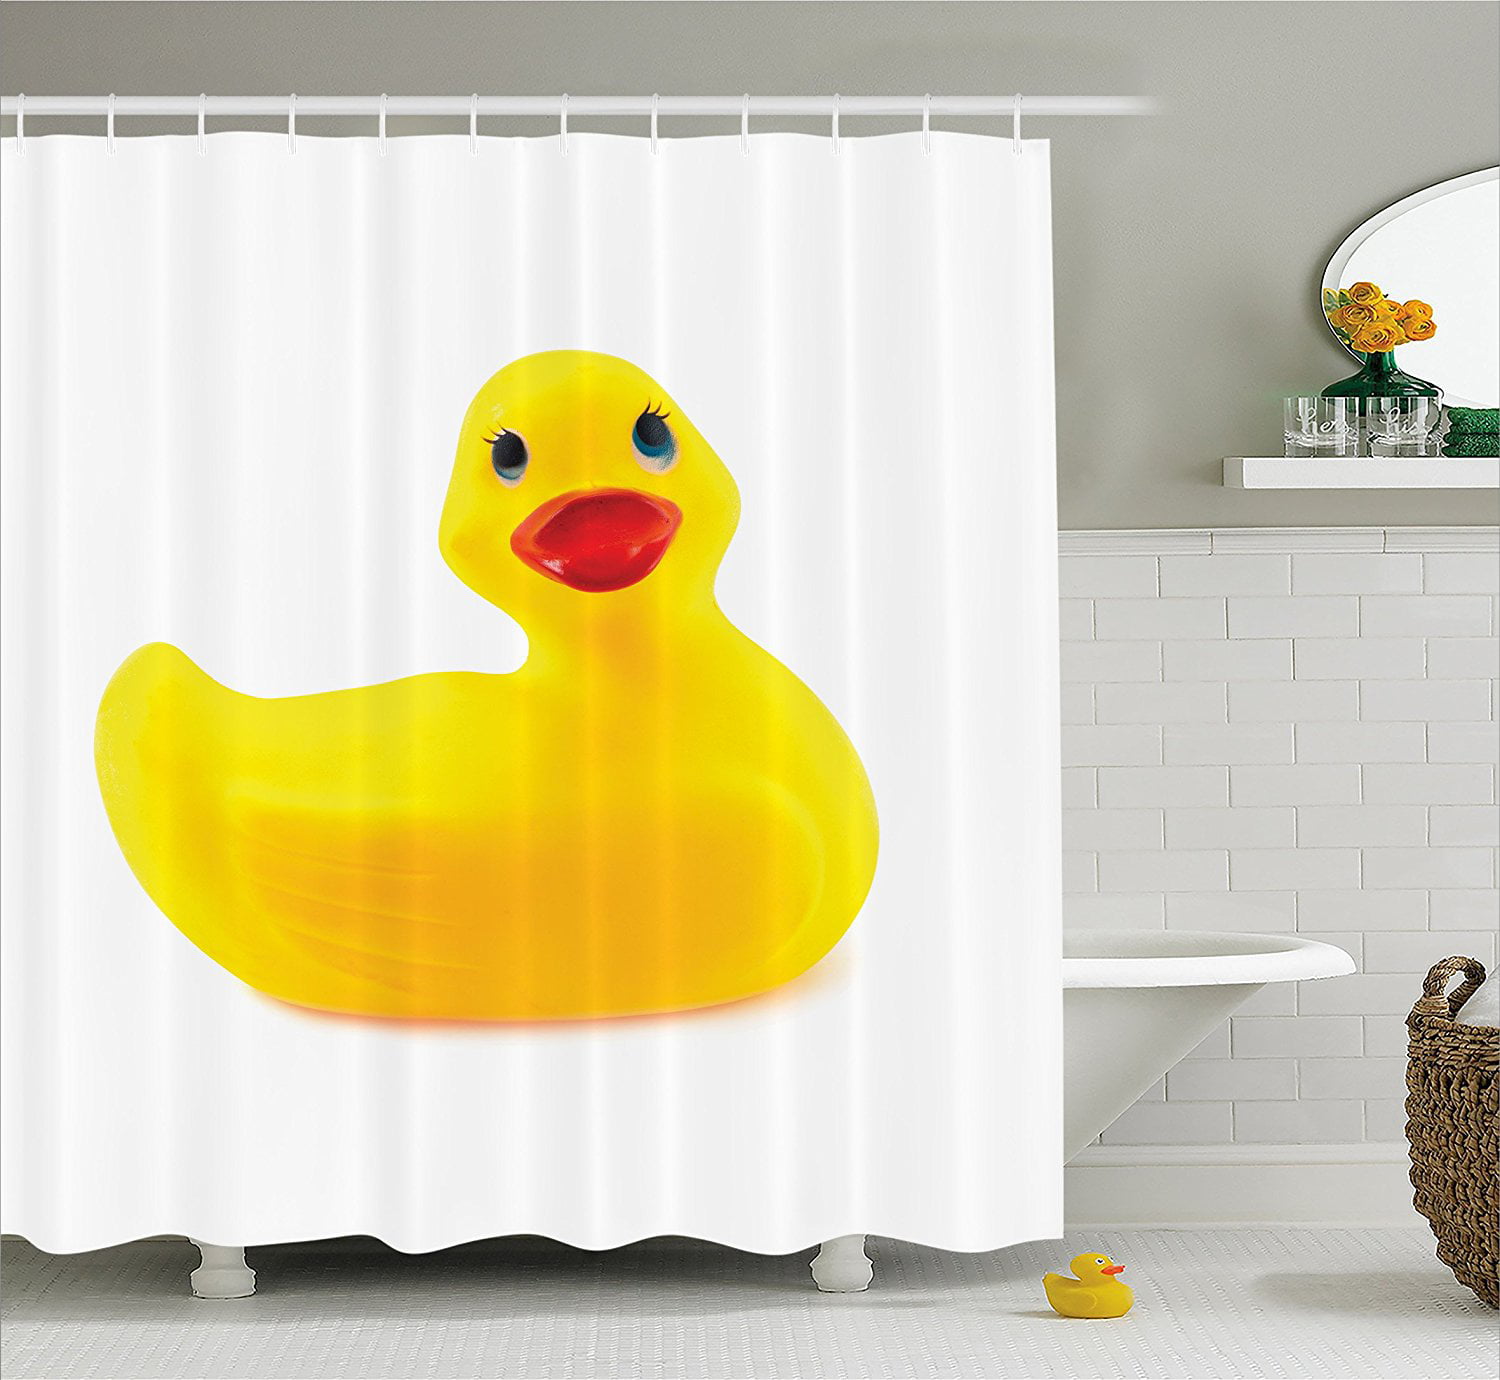 Many Little Yellow Ducks 3D Shower Curtain Waterproof Fabric Bathroom Decoration 